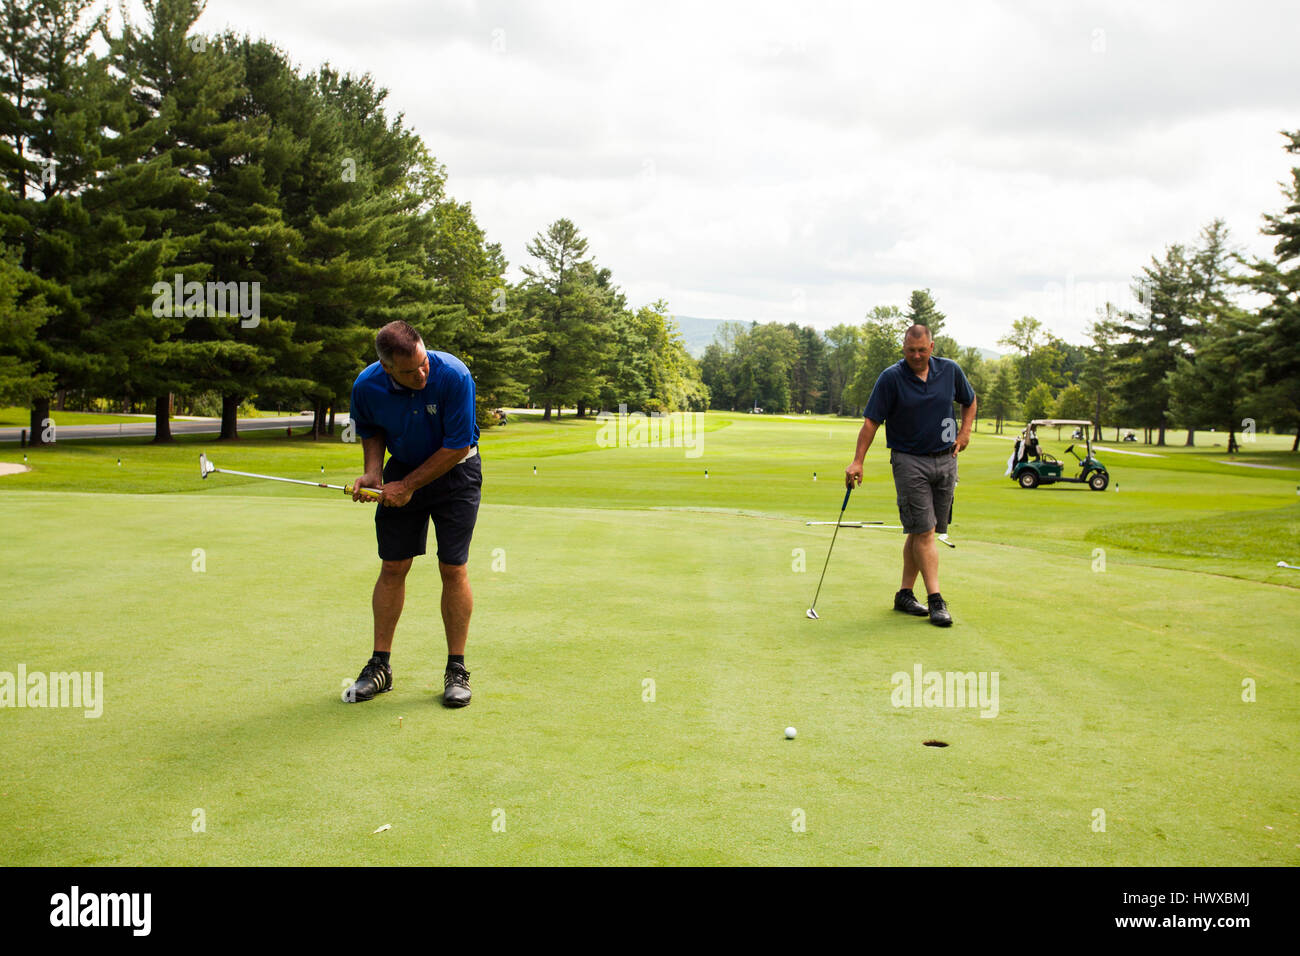 Ein sonniger Tag für Golf im Country club Stockfoto